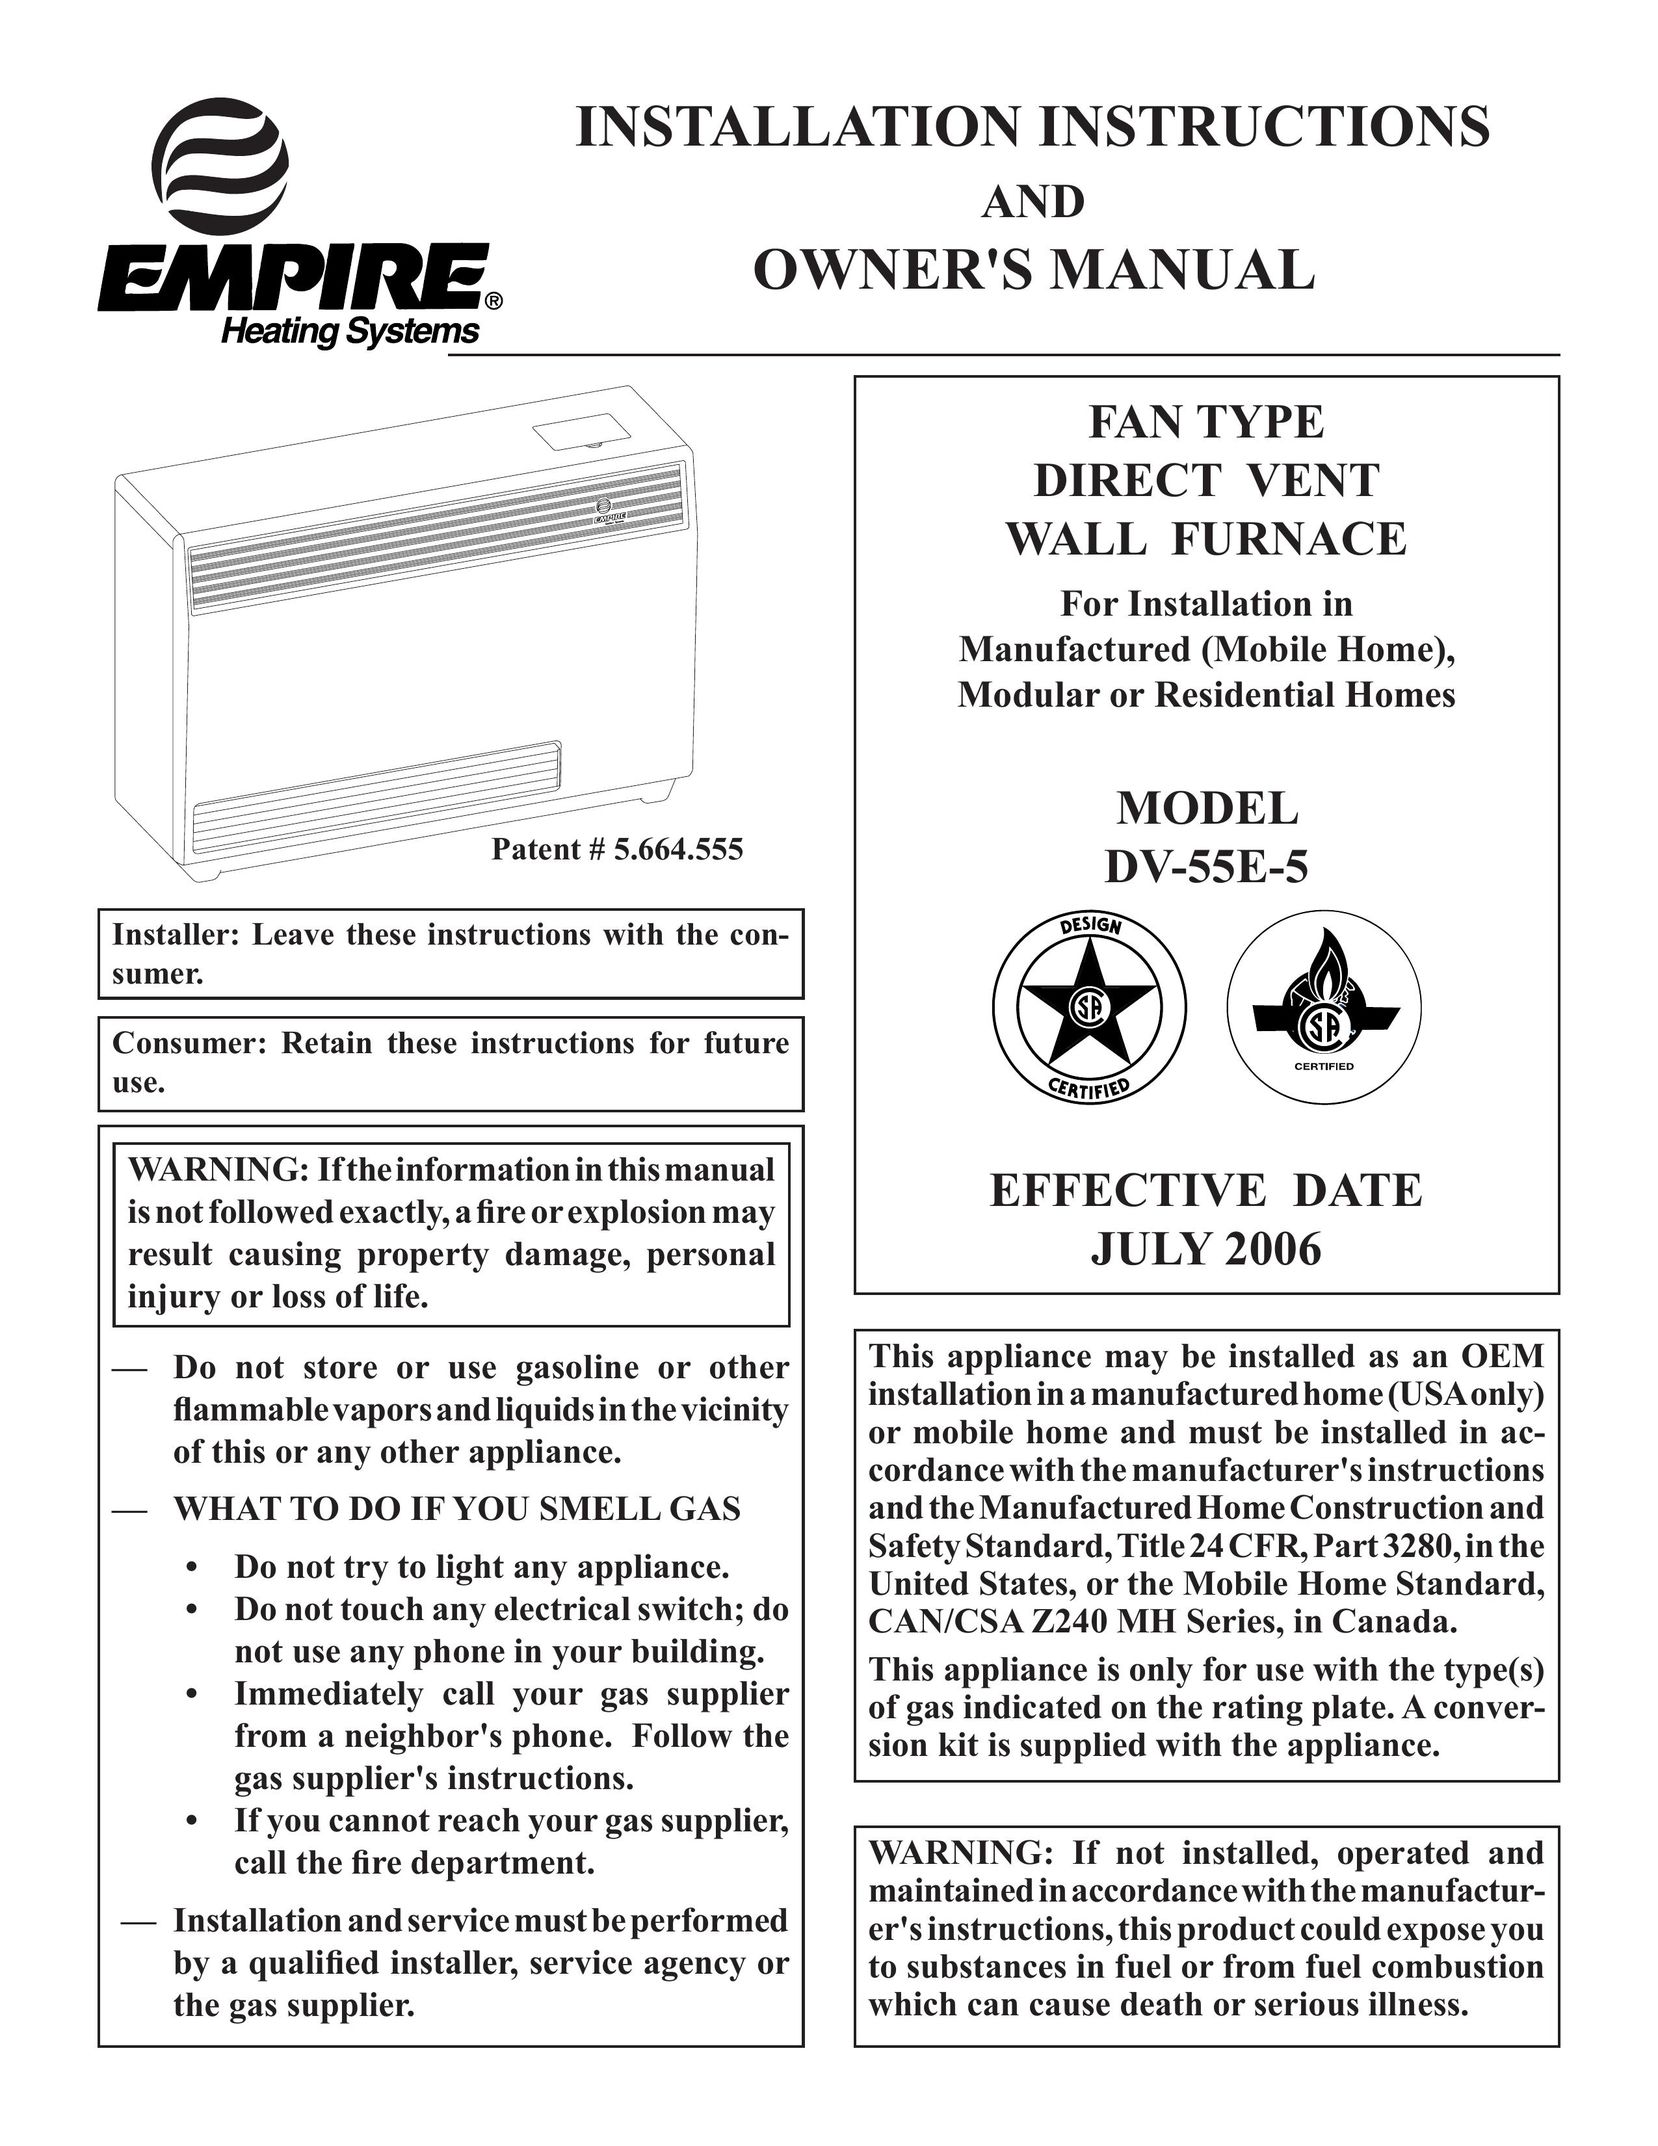 Empire Comfort Systems DV-55E-5 Furnace User Manual